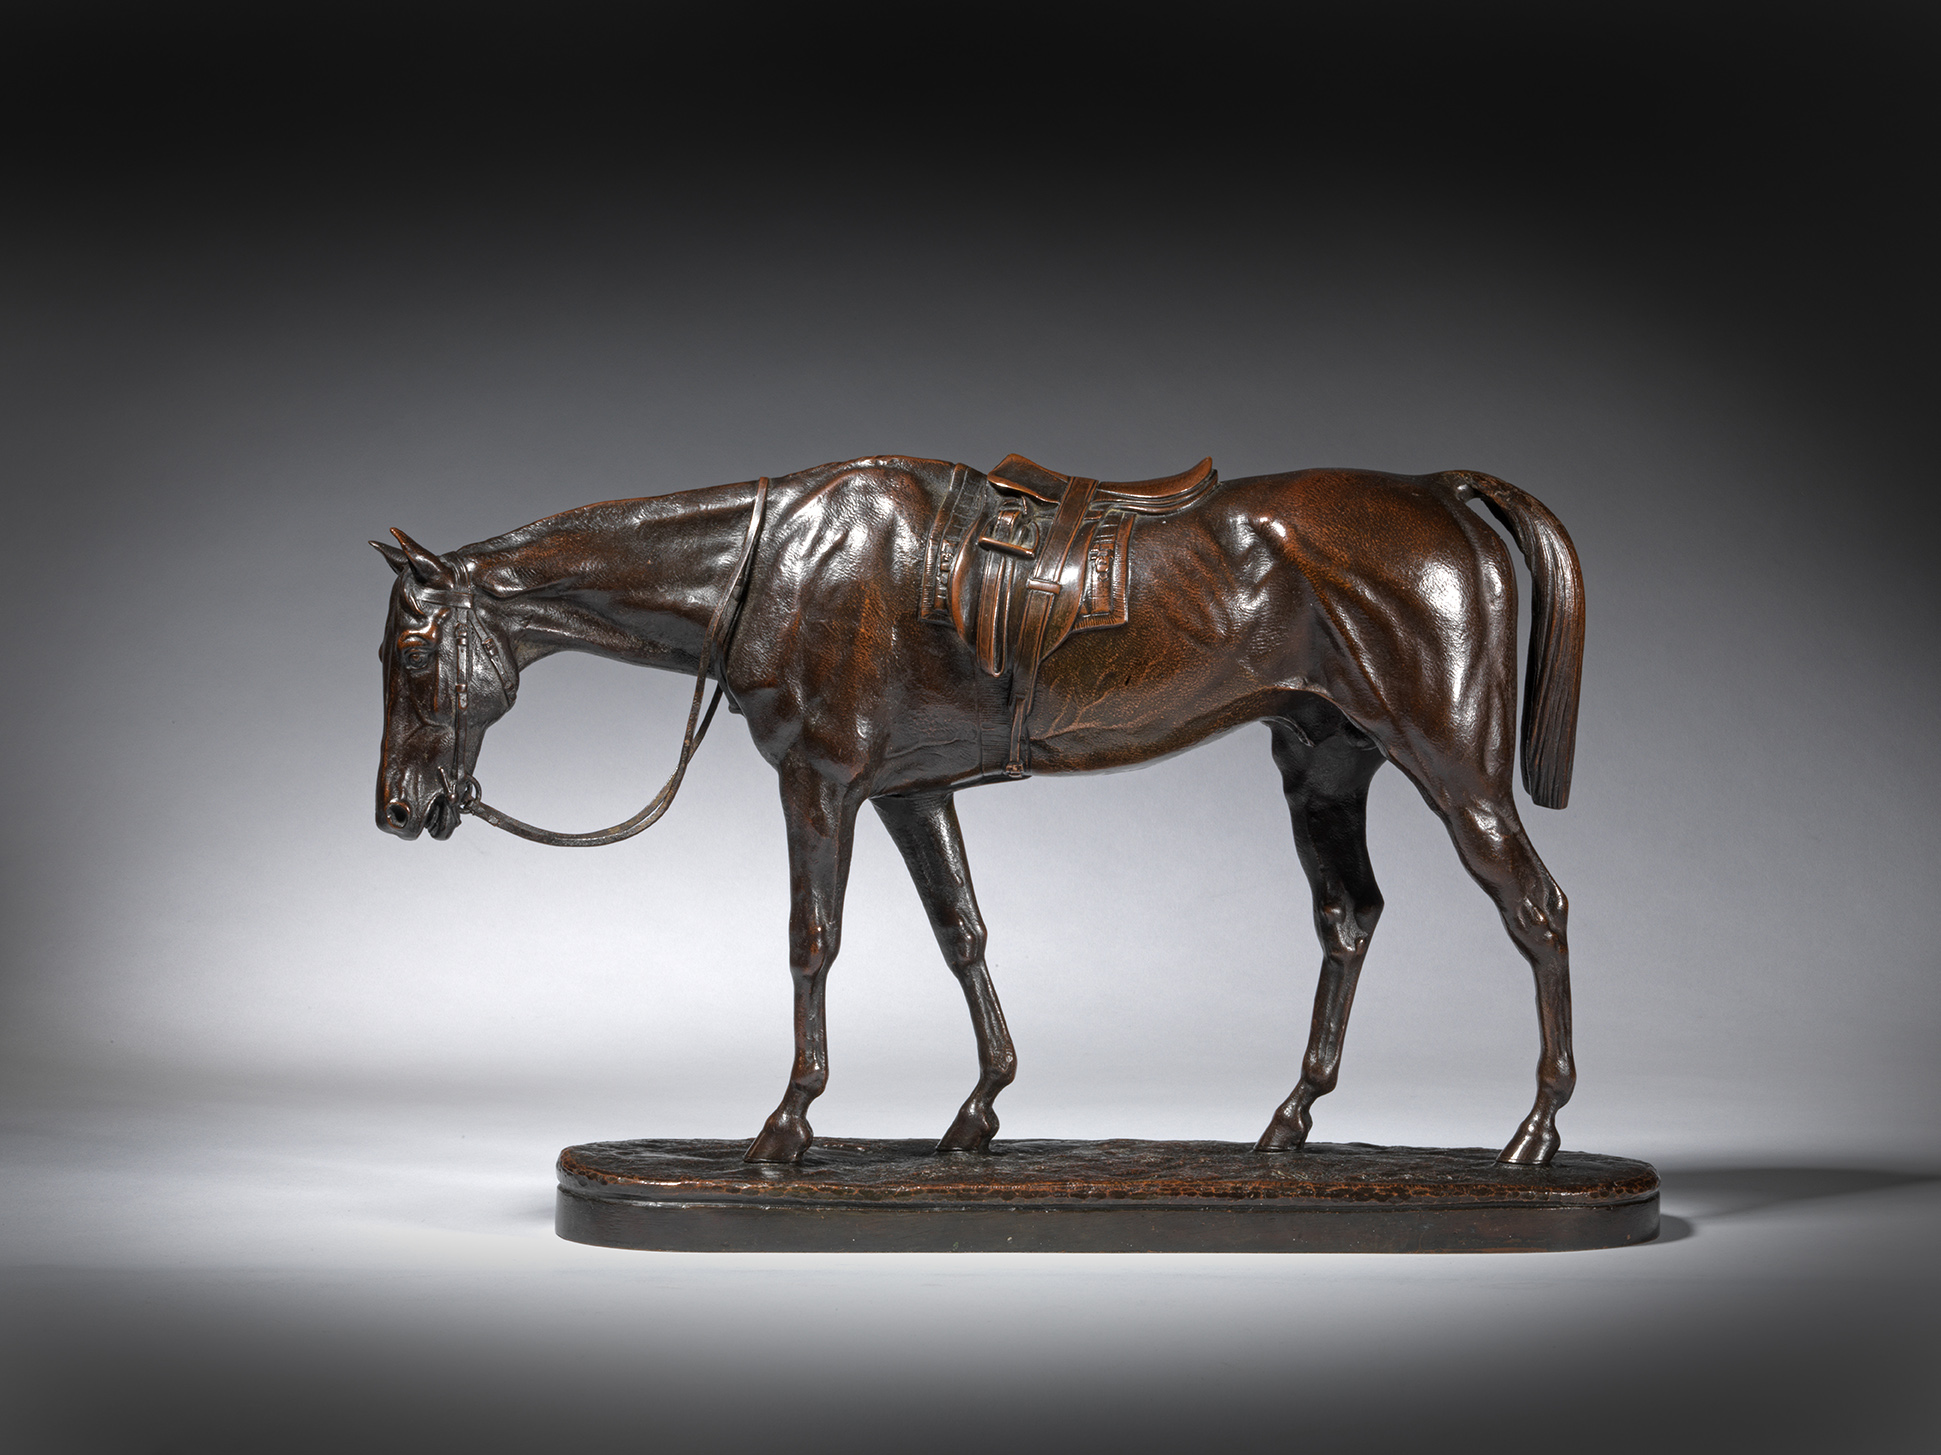 Saddled Race Horse, head lowered, c. 1870